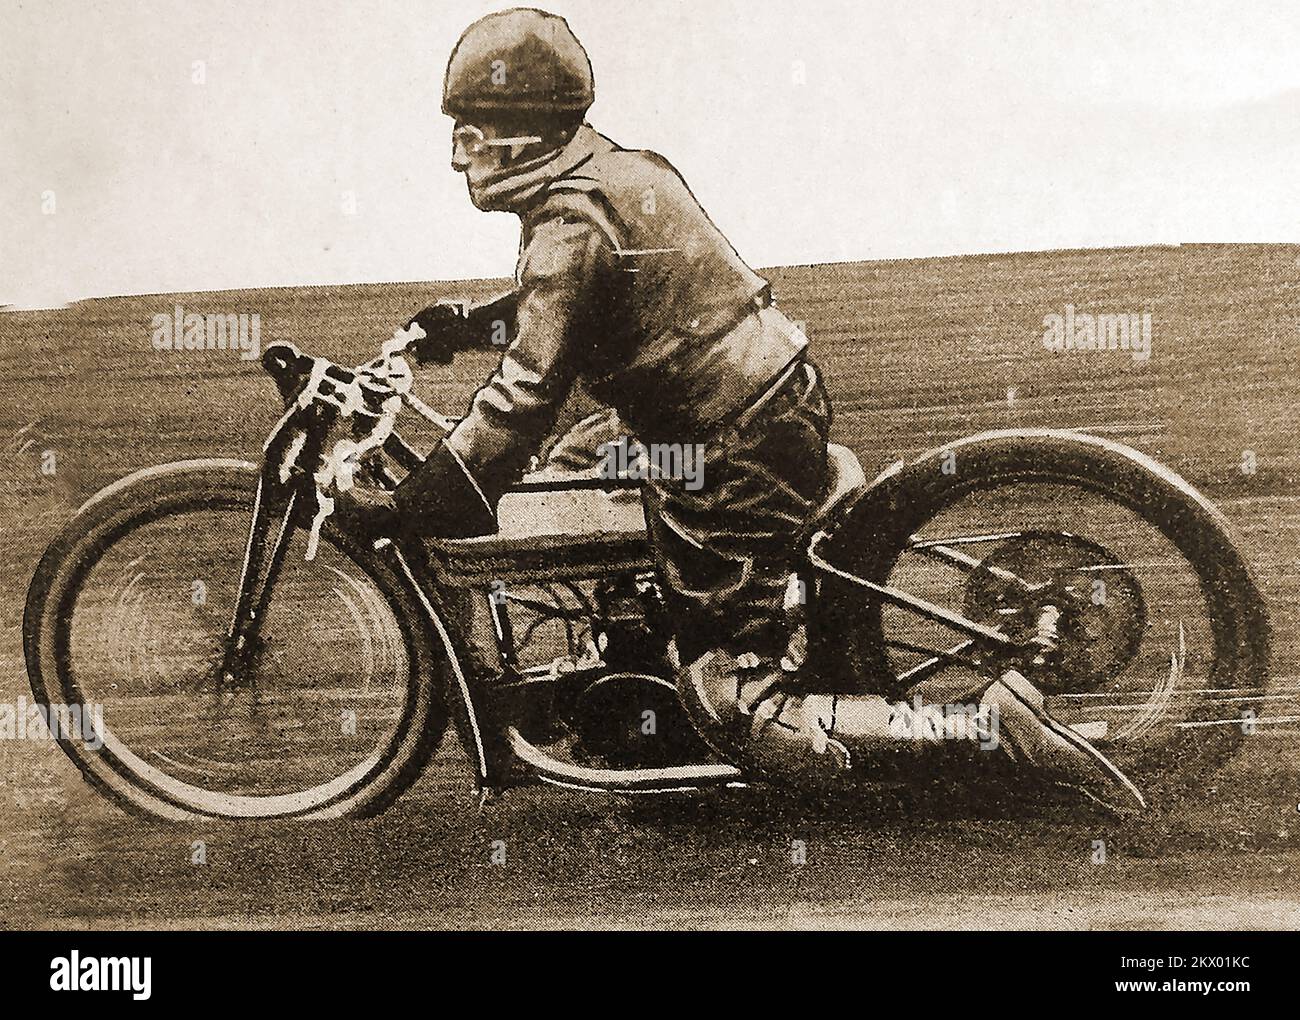 1930's image of dirt track rider George Shaw at White City Speedway stadium. Shaw Stock Photo